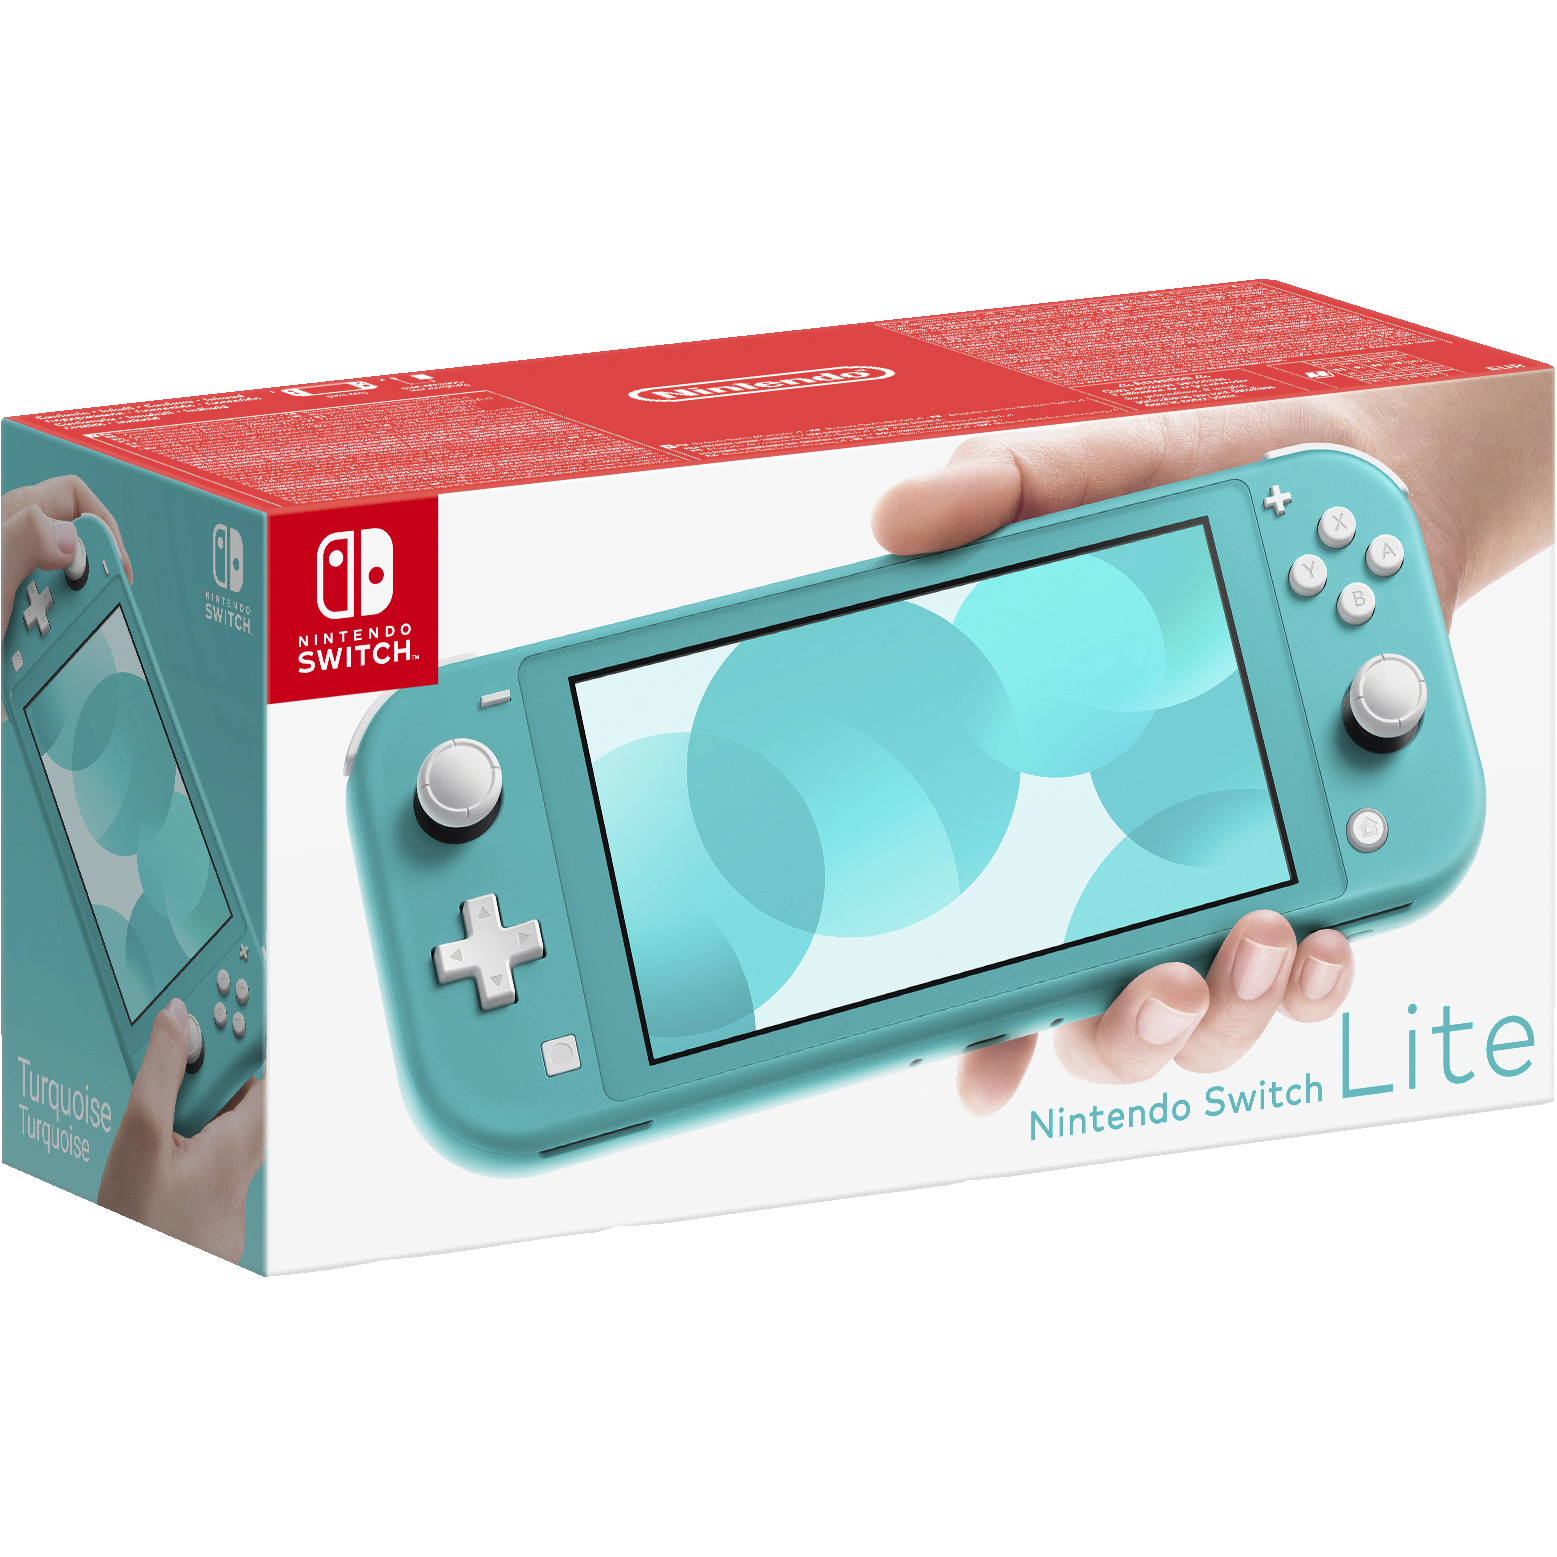 "En nydelig håndholdt spillkonsoll" Sier tek.no om Nintendo Switch Lite i deres test, september 2019.